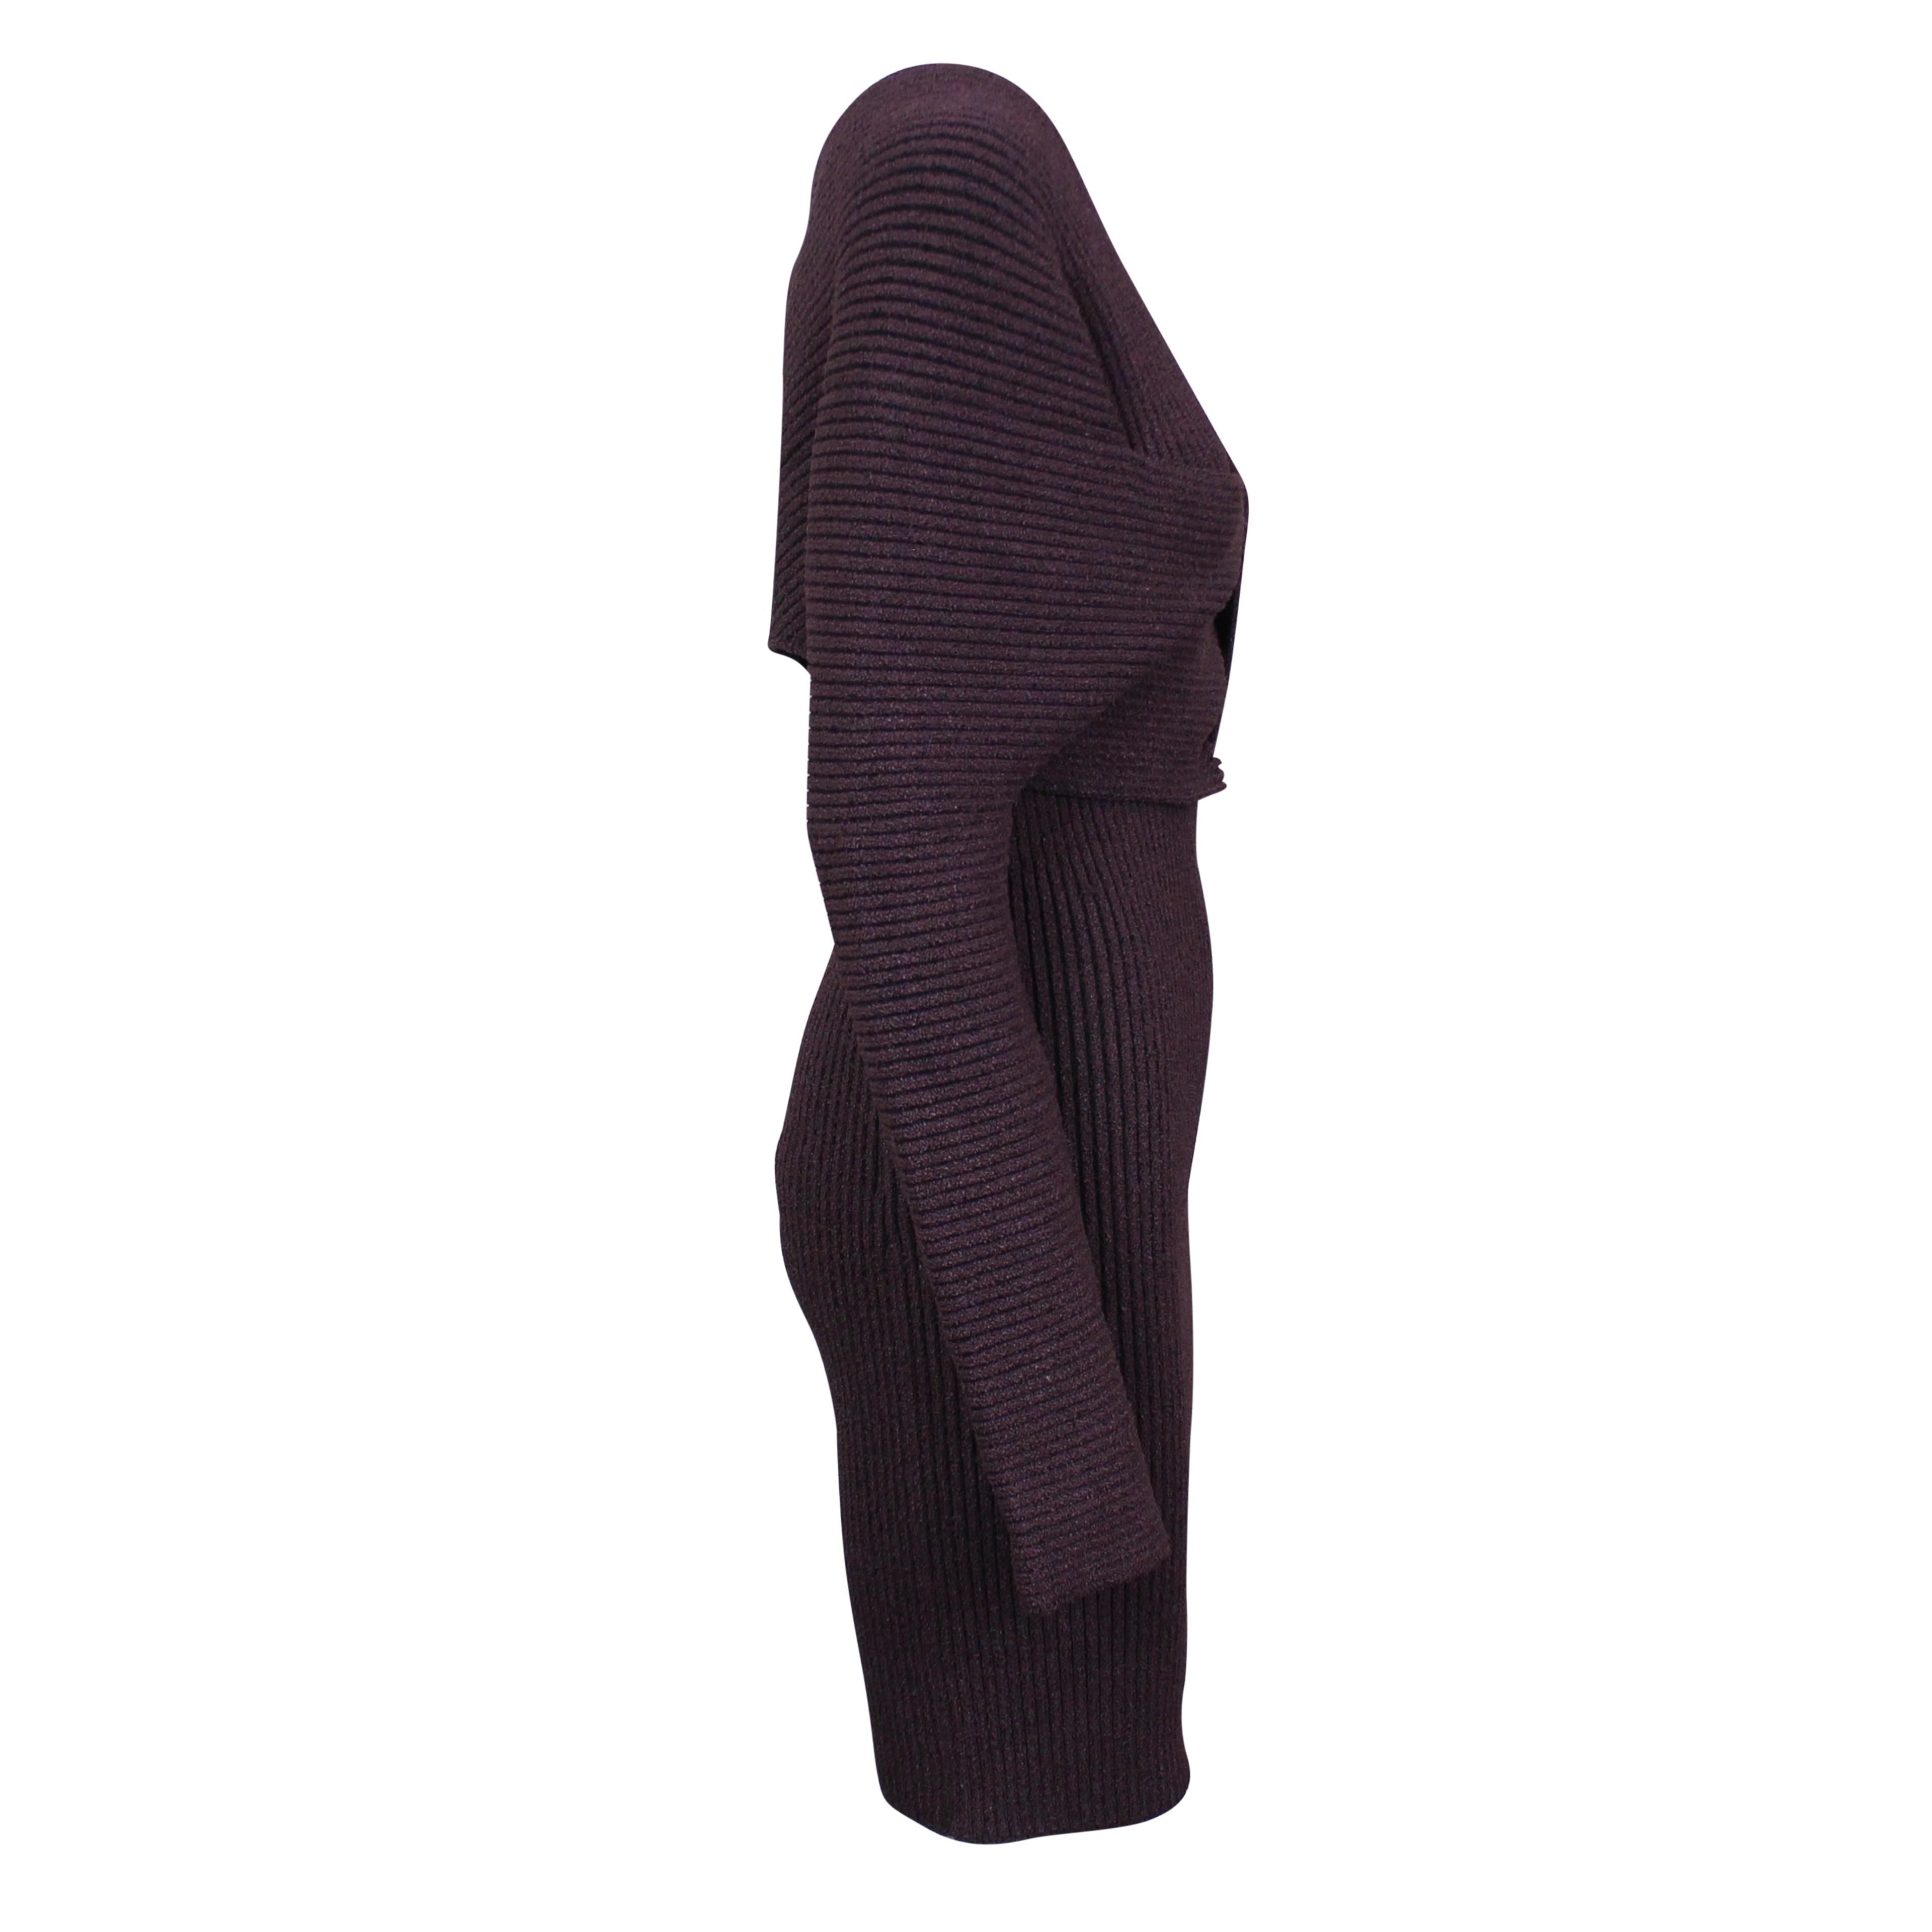 Alternate View 2 of Purple Sable Rib Knit Short Dress